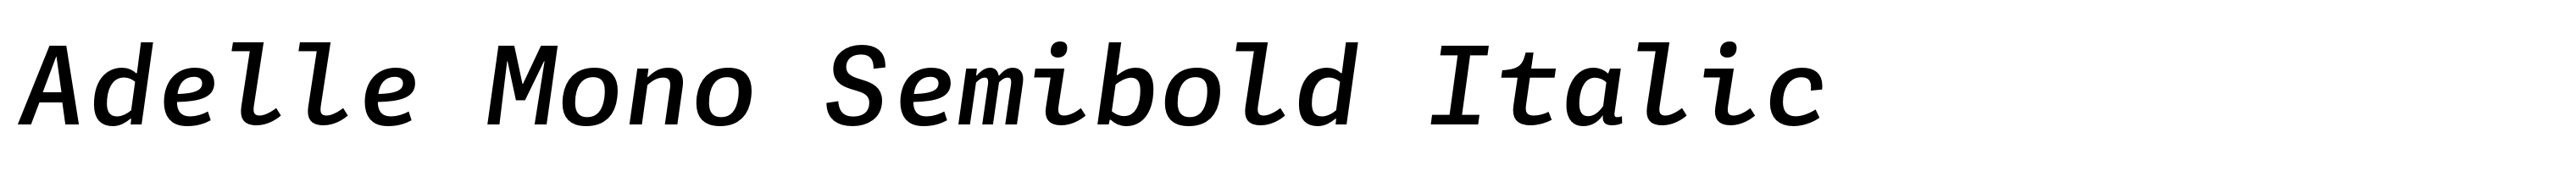 Adelle Mono Semibold Italic